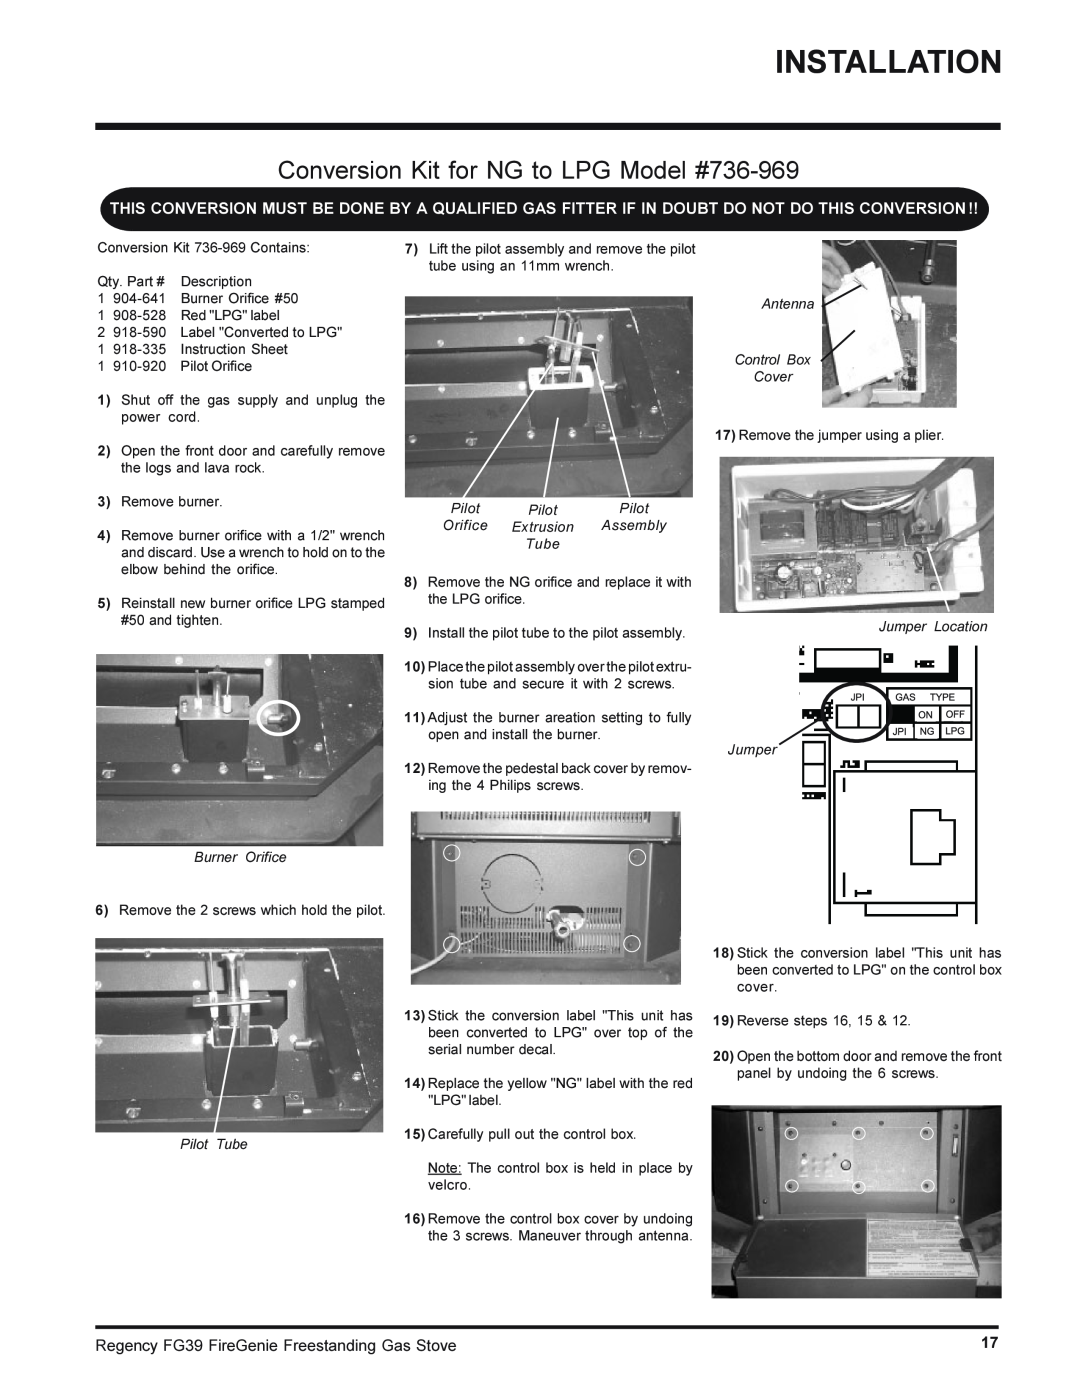 Regency FG39-NG Conversion Kit for NG to LPG Model #736-969, Burner Orifice, Antenna Control Box Cover, Pilot, Extrusion 